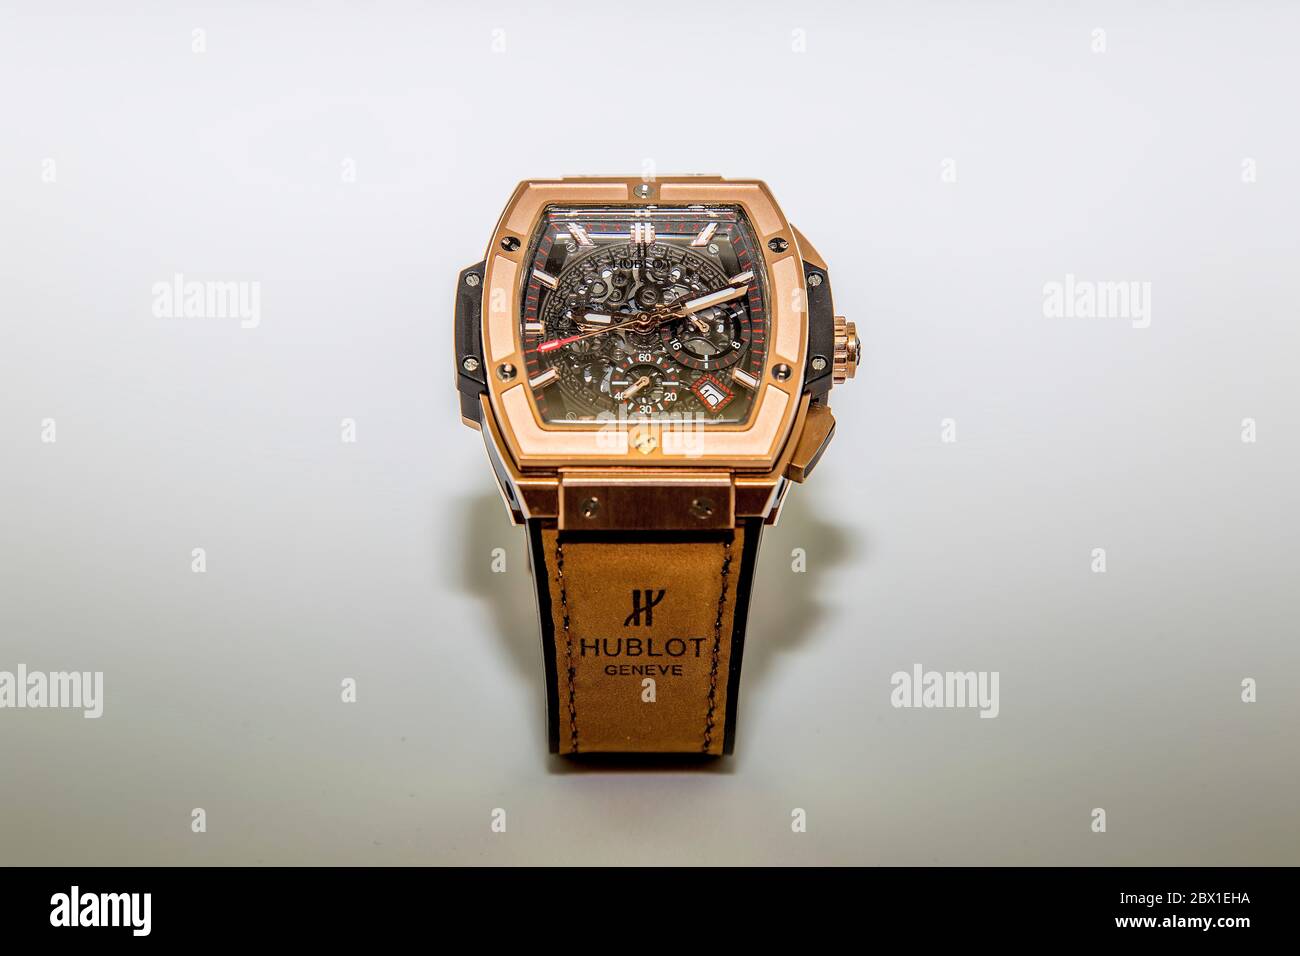 Hublot Spirit of Big Bang Chronograph with golden leather strap Stock Photo  - Alamy